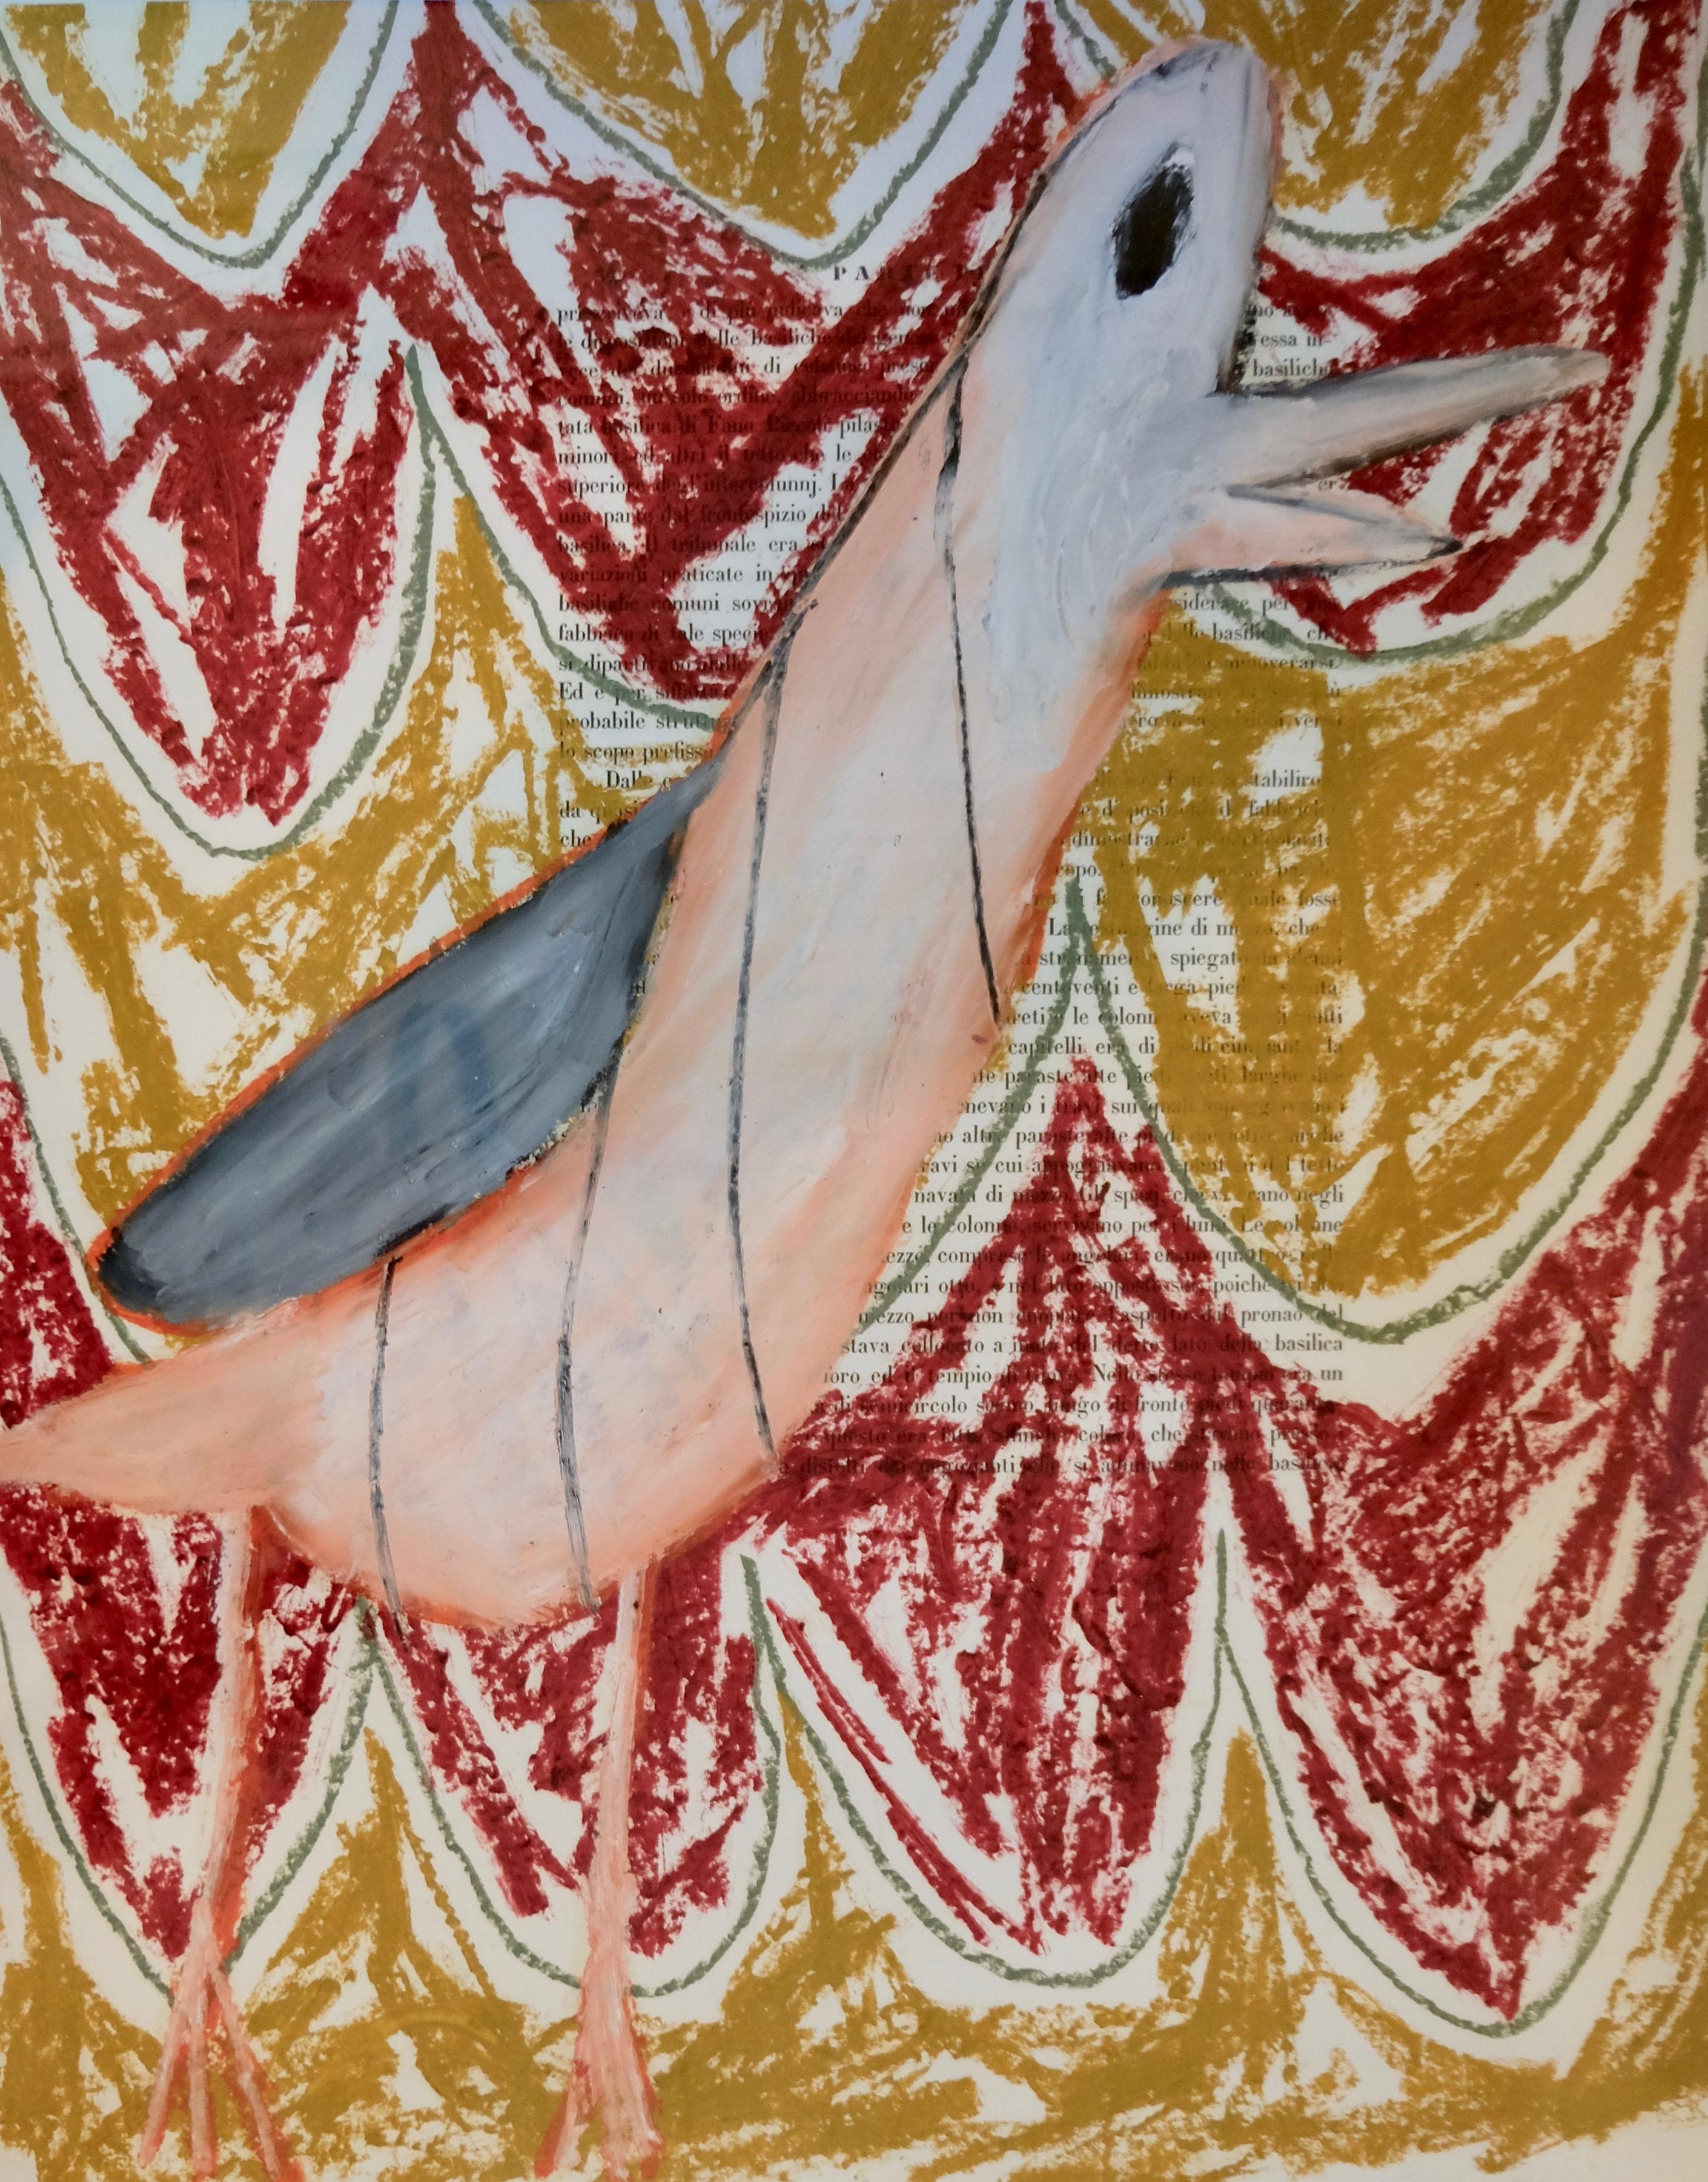 Adam Handler Animal Art - My Little Bird